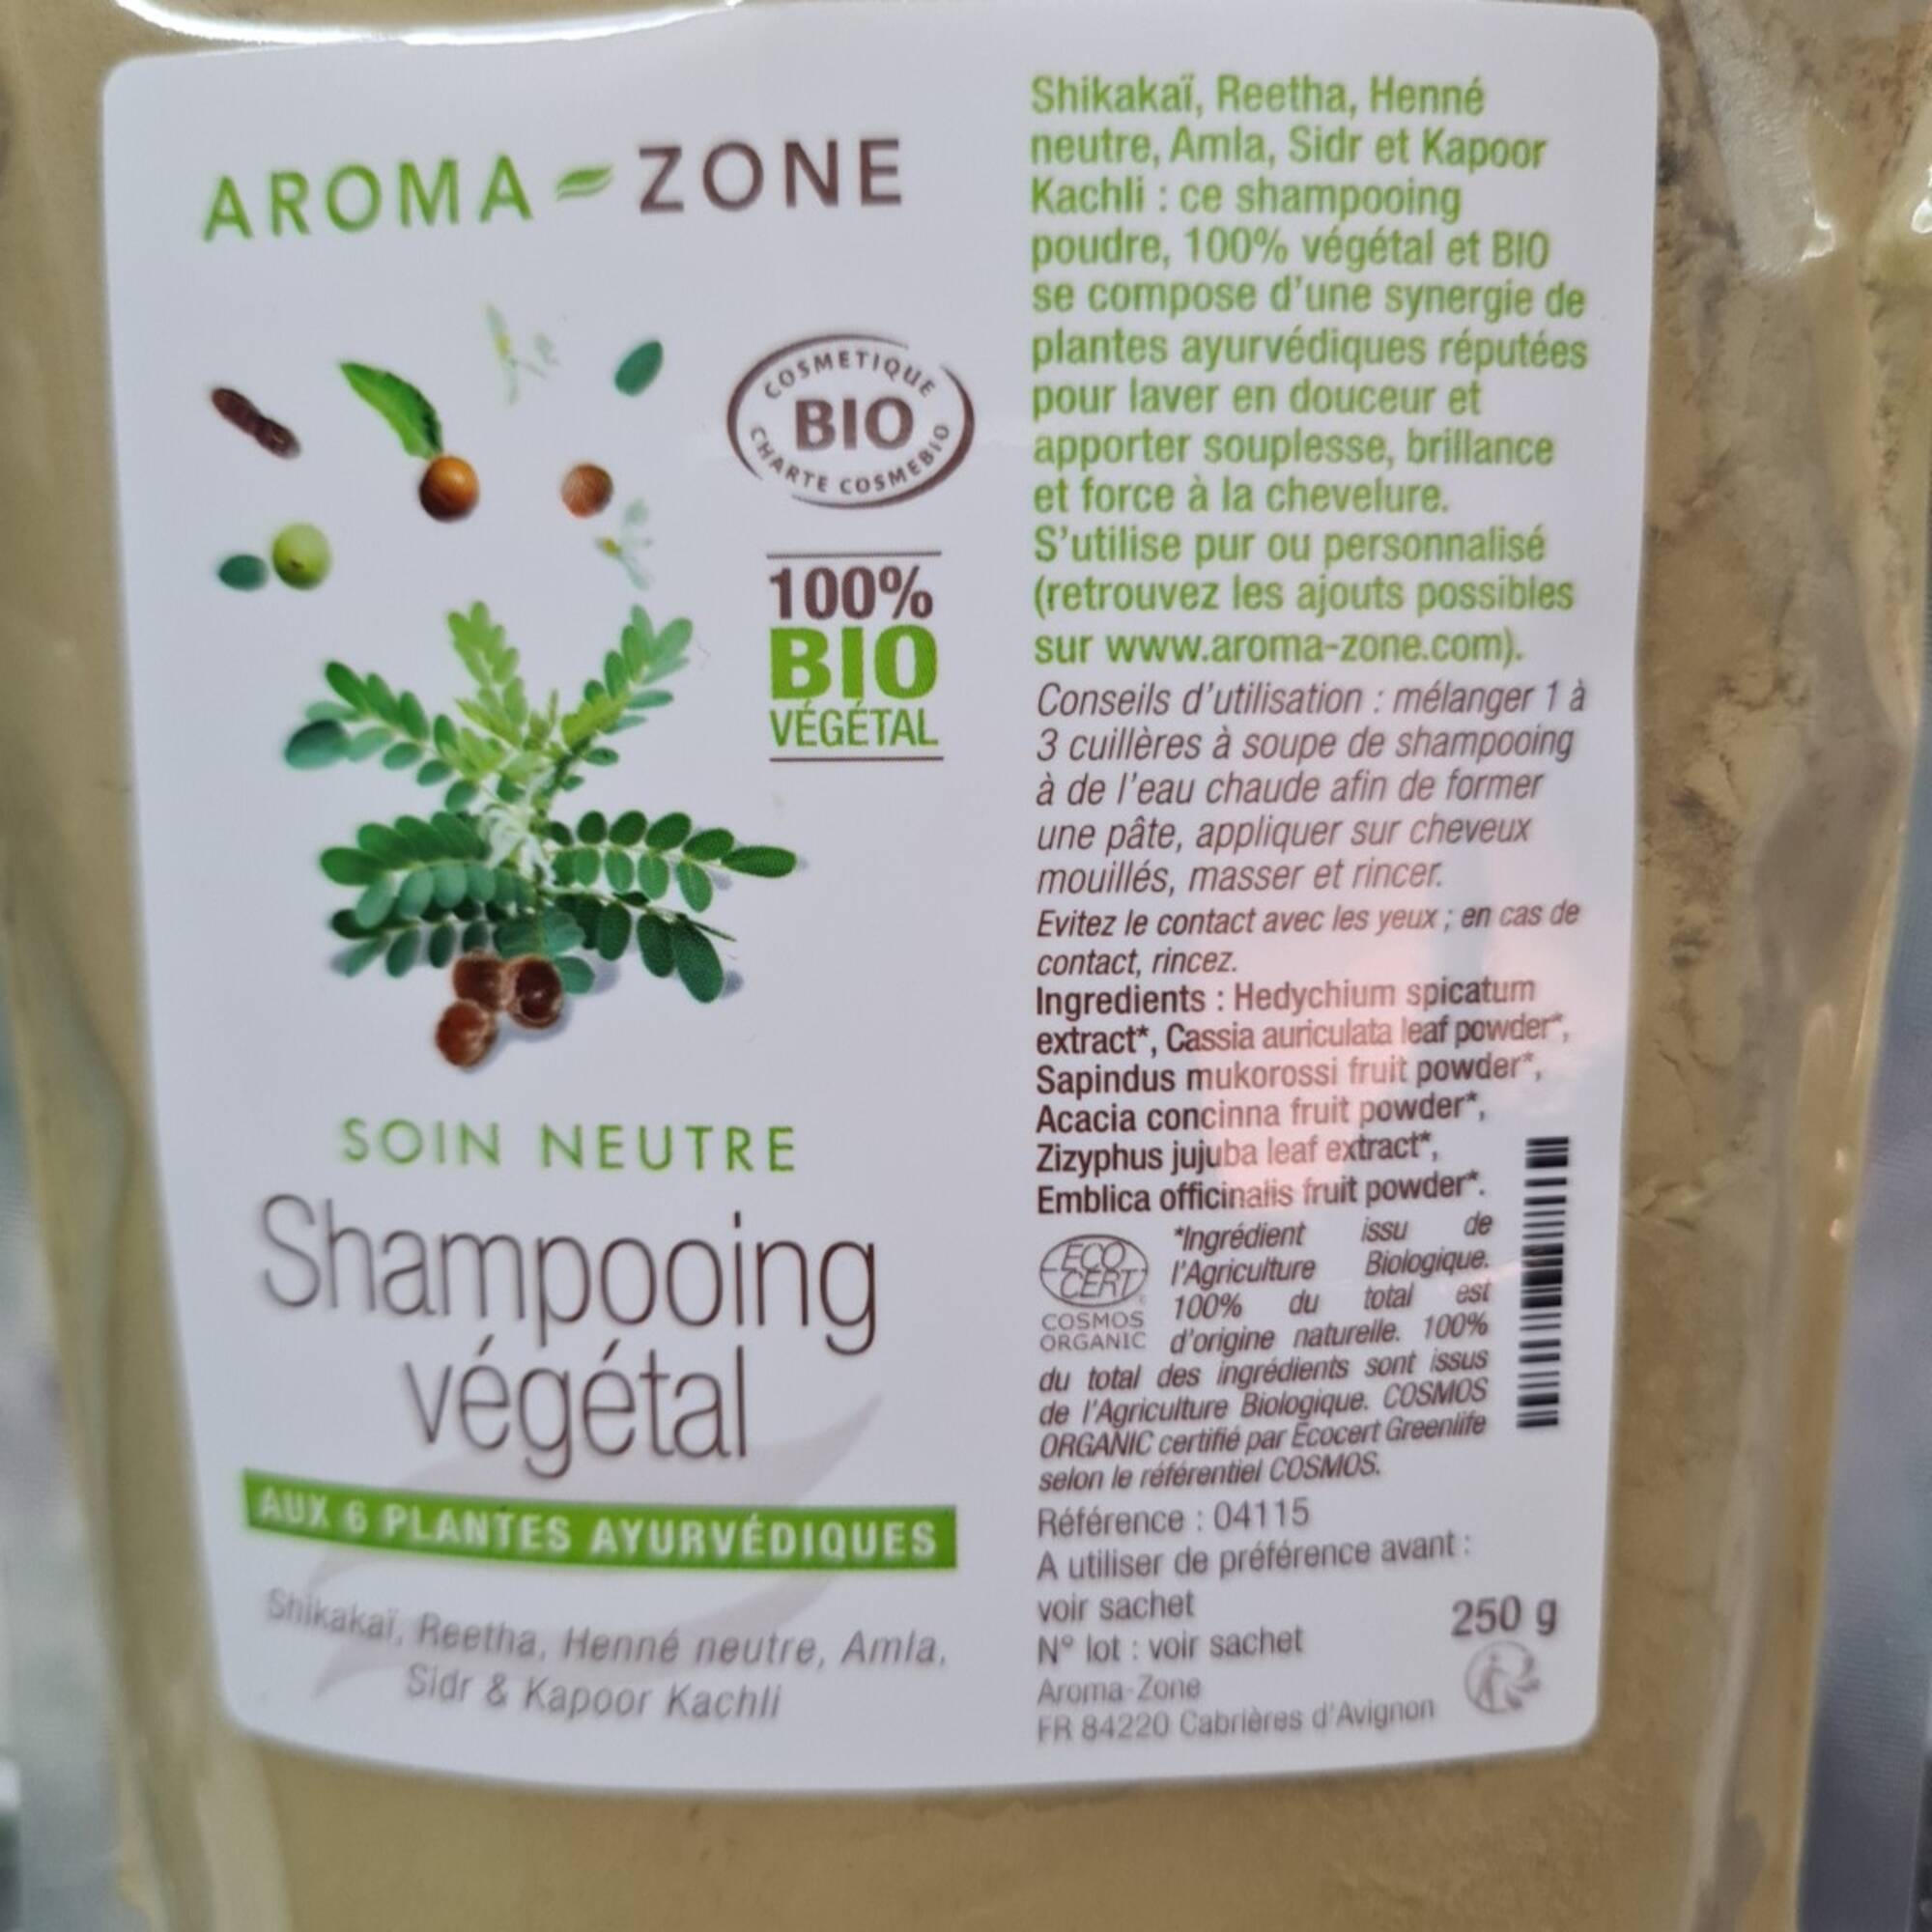 AROMA-ZONE - Soin neutre - Shampooing végétal bio